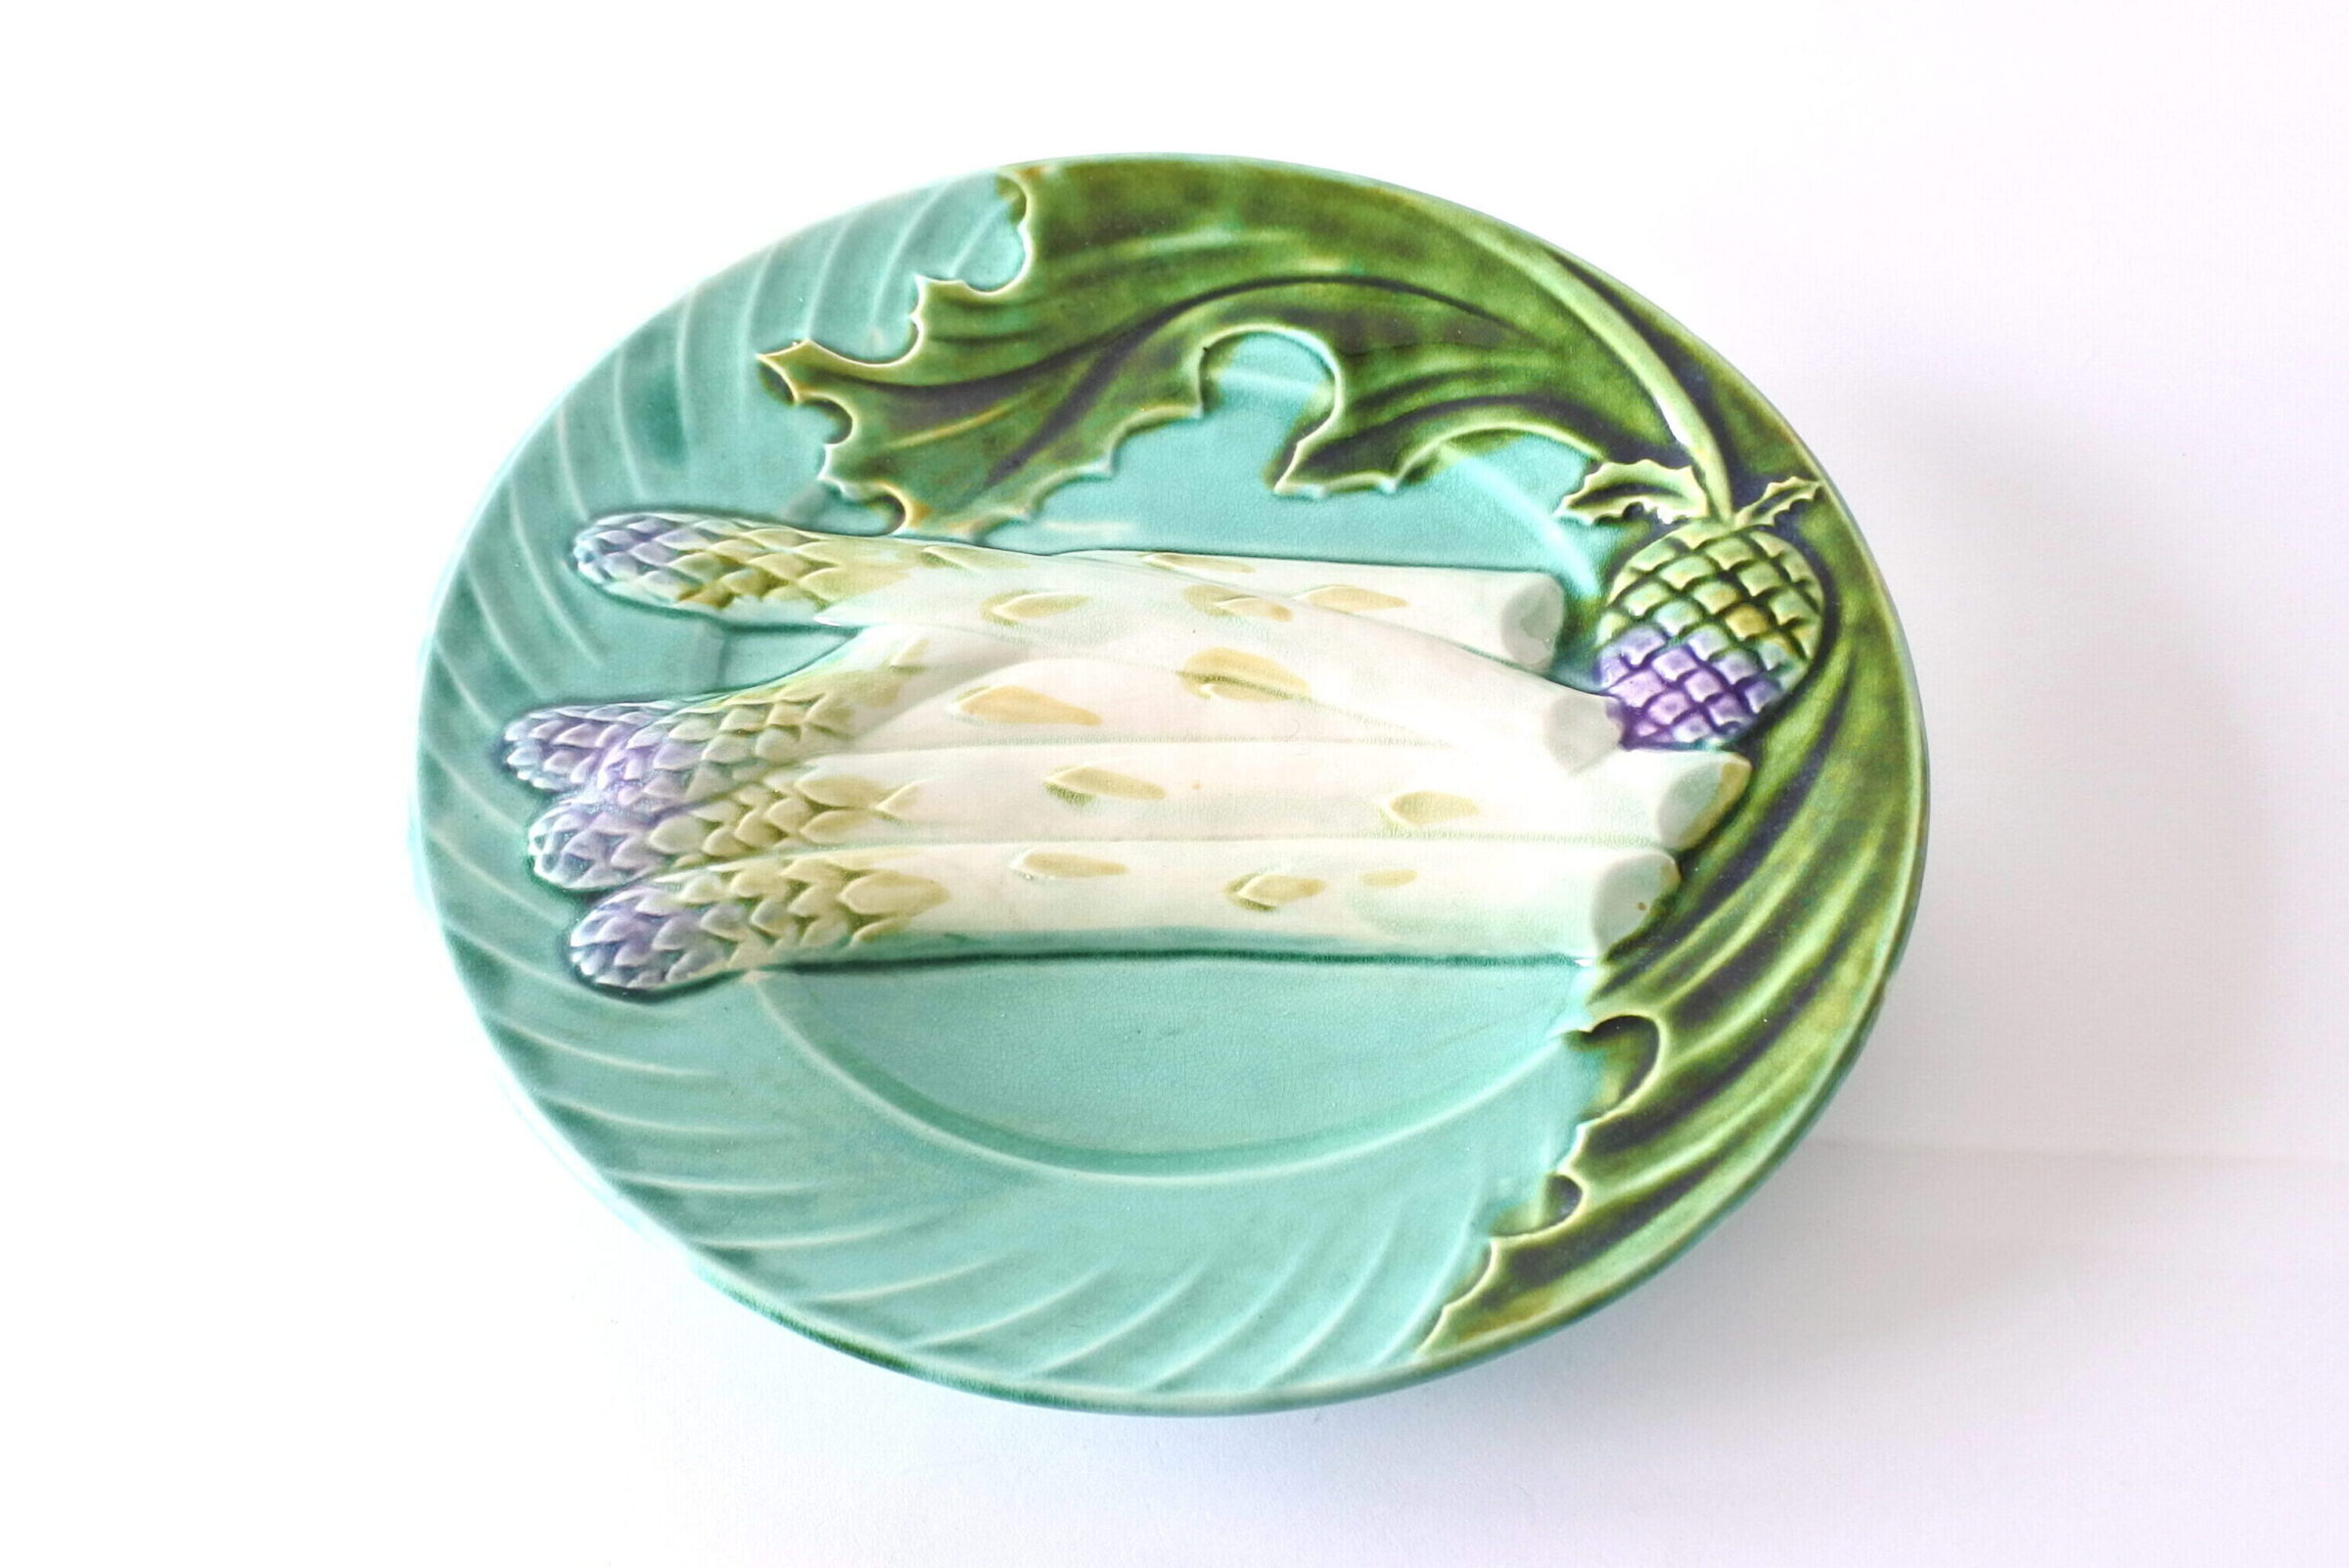 Piatto in ceramica barbotine per asparagi - Manifattura Salins